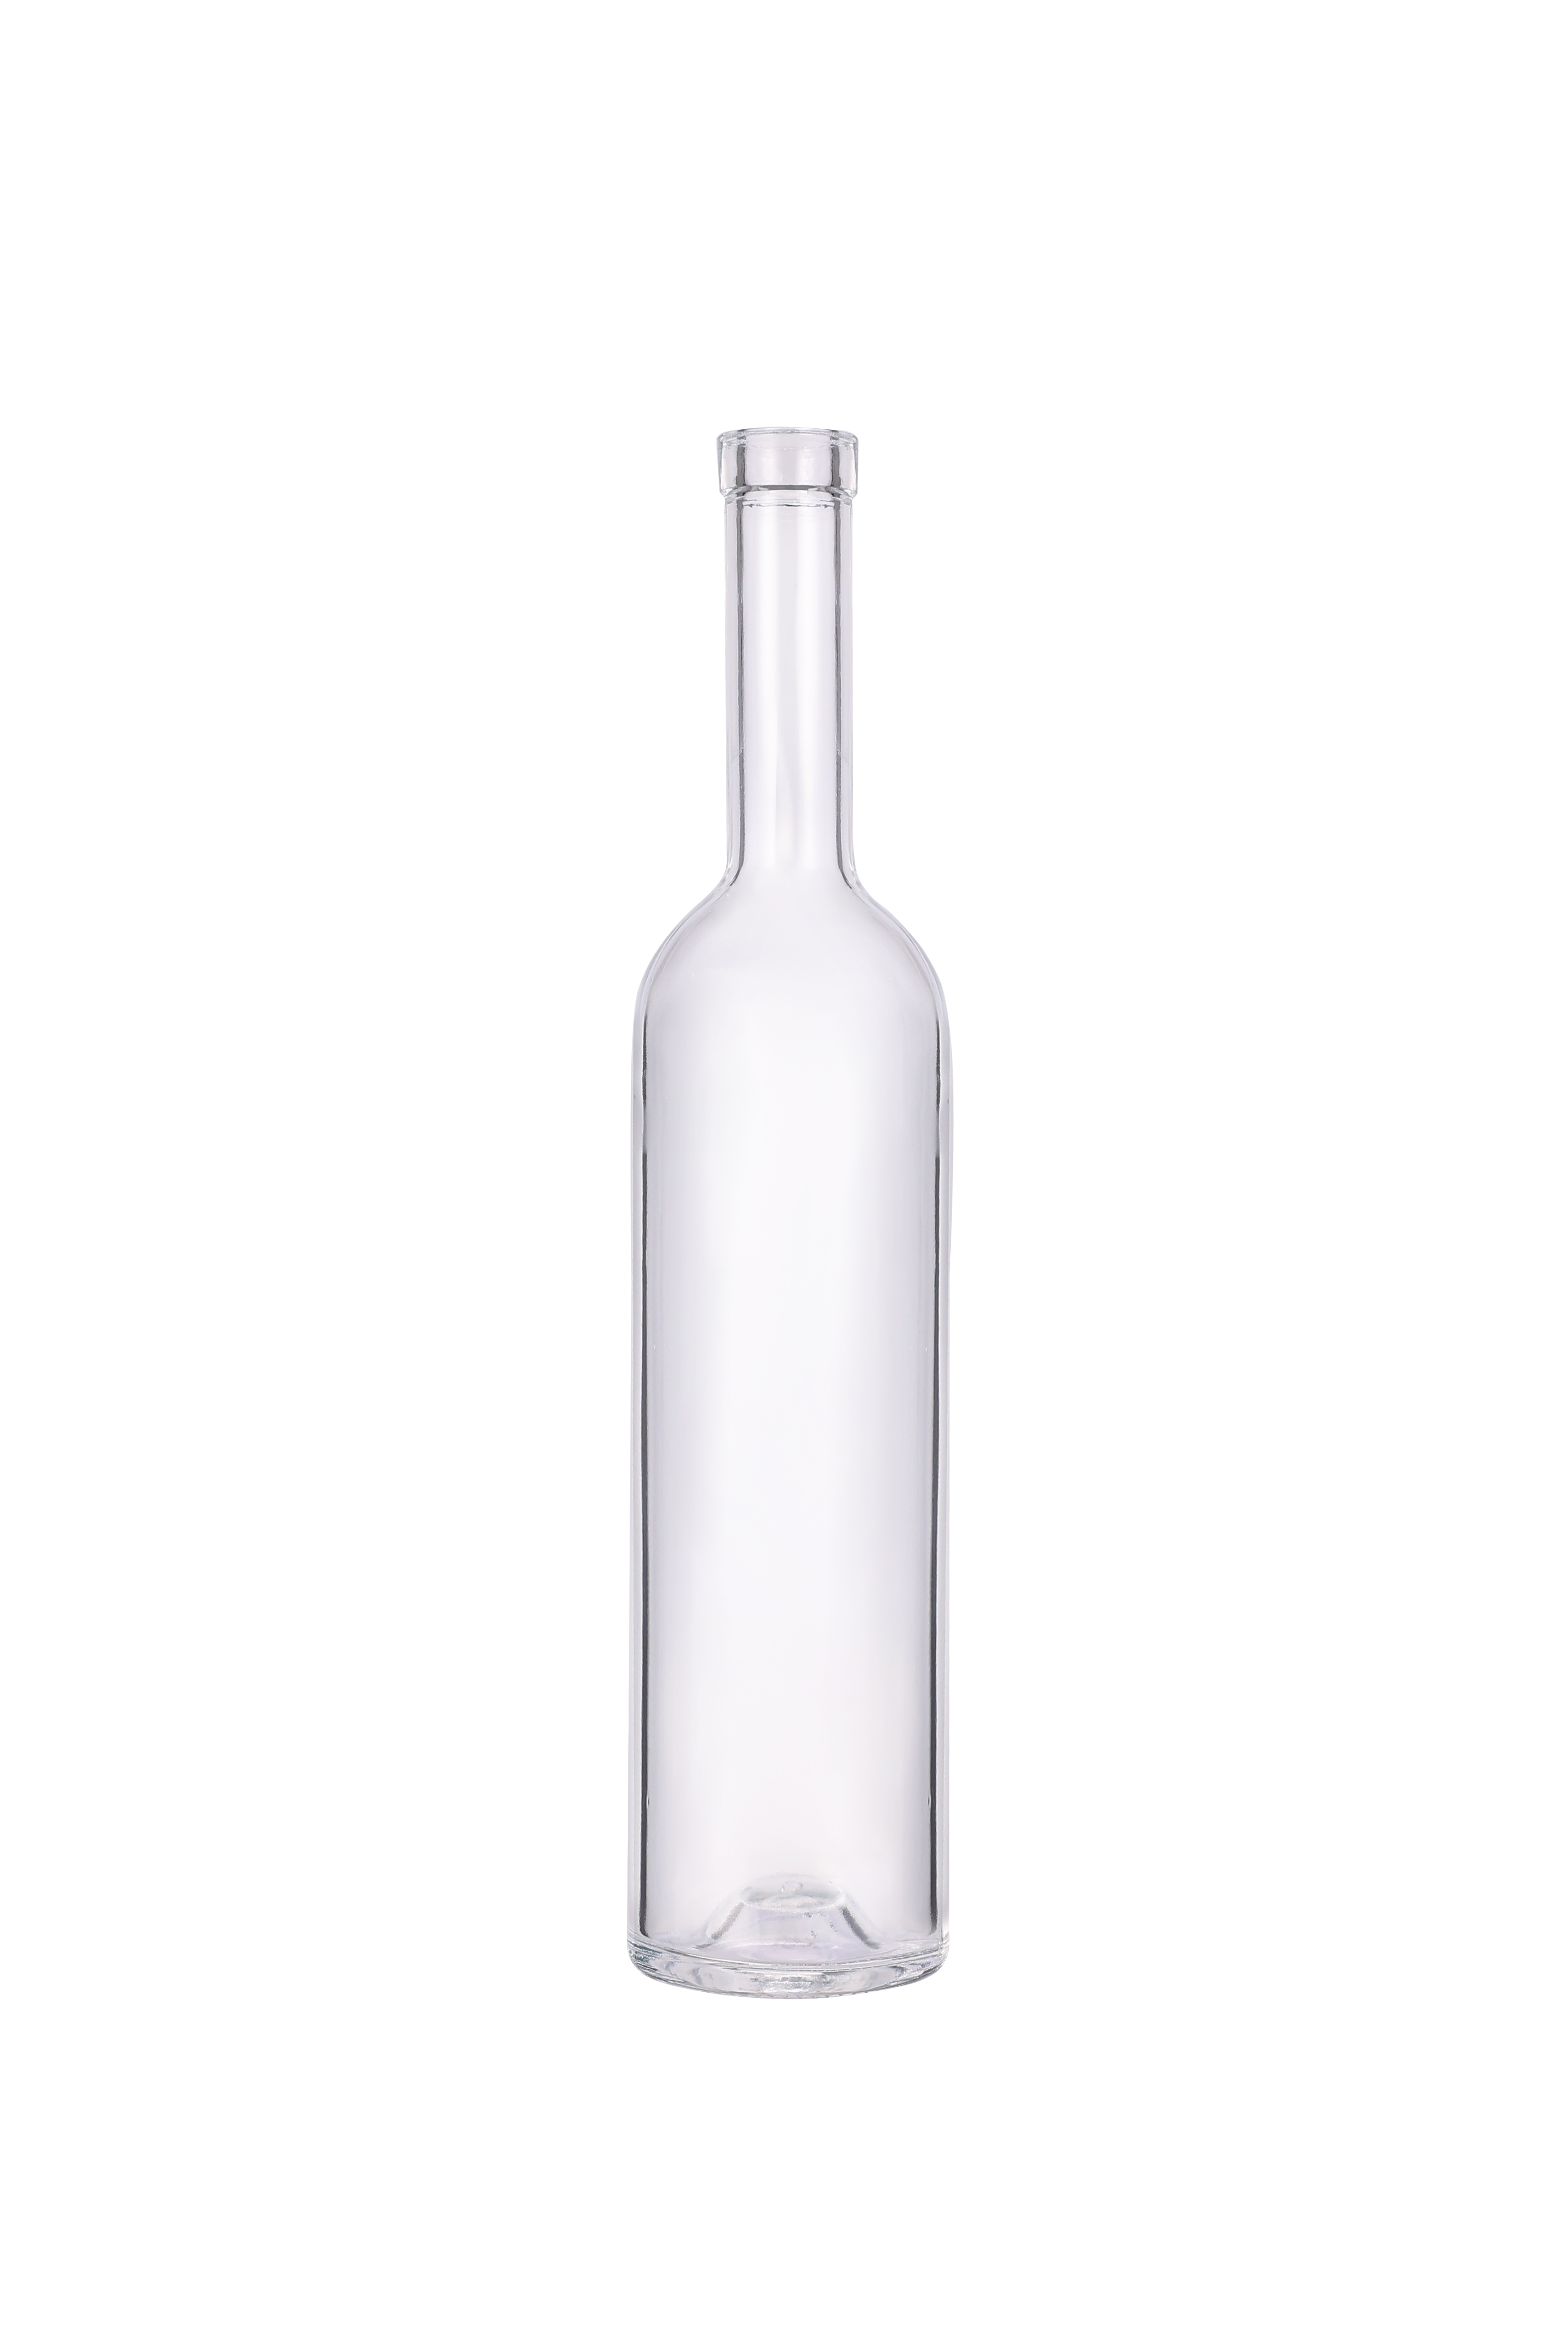 Wholesale Round Glass Bottles 750ml Glass Bottles Customized Size Bulk Quantity